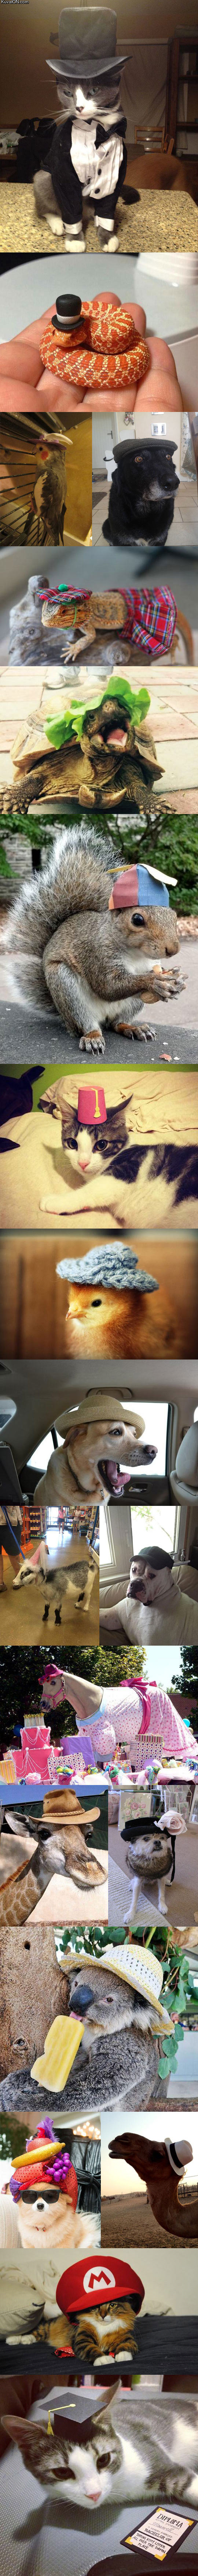 animals_wearing_hats.jpg